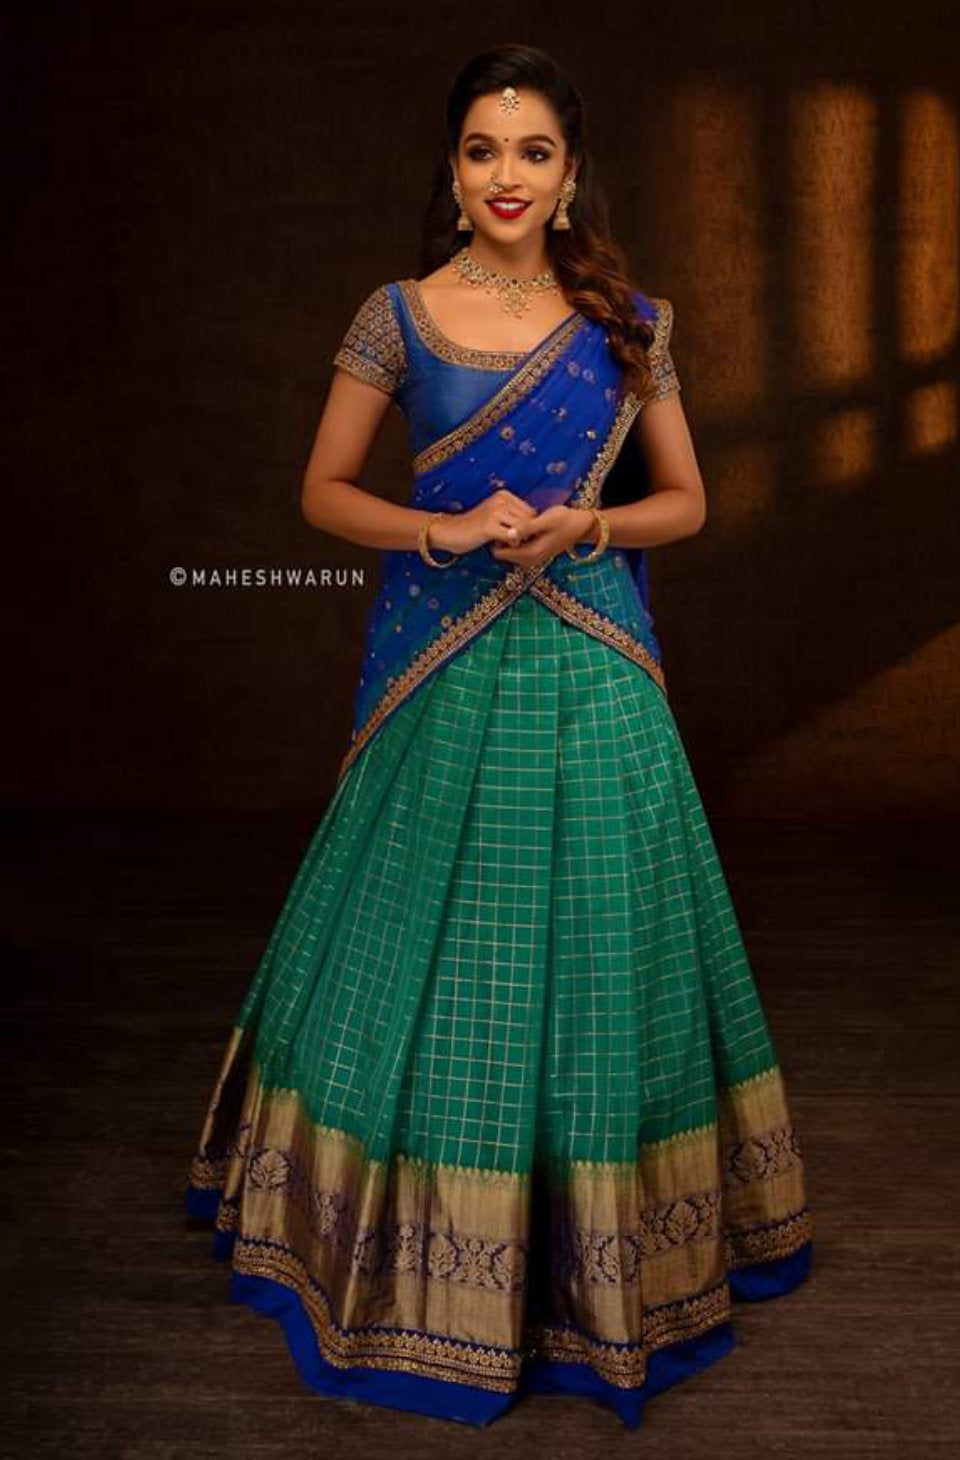 Kerala Saree with Blue Blouse | Blouse Designs for set saree | കേരള സാരി  നീല ബ്ലൗസിനൊപ്പം ഉടുക്കാം - YouTube